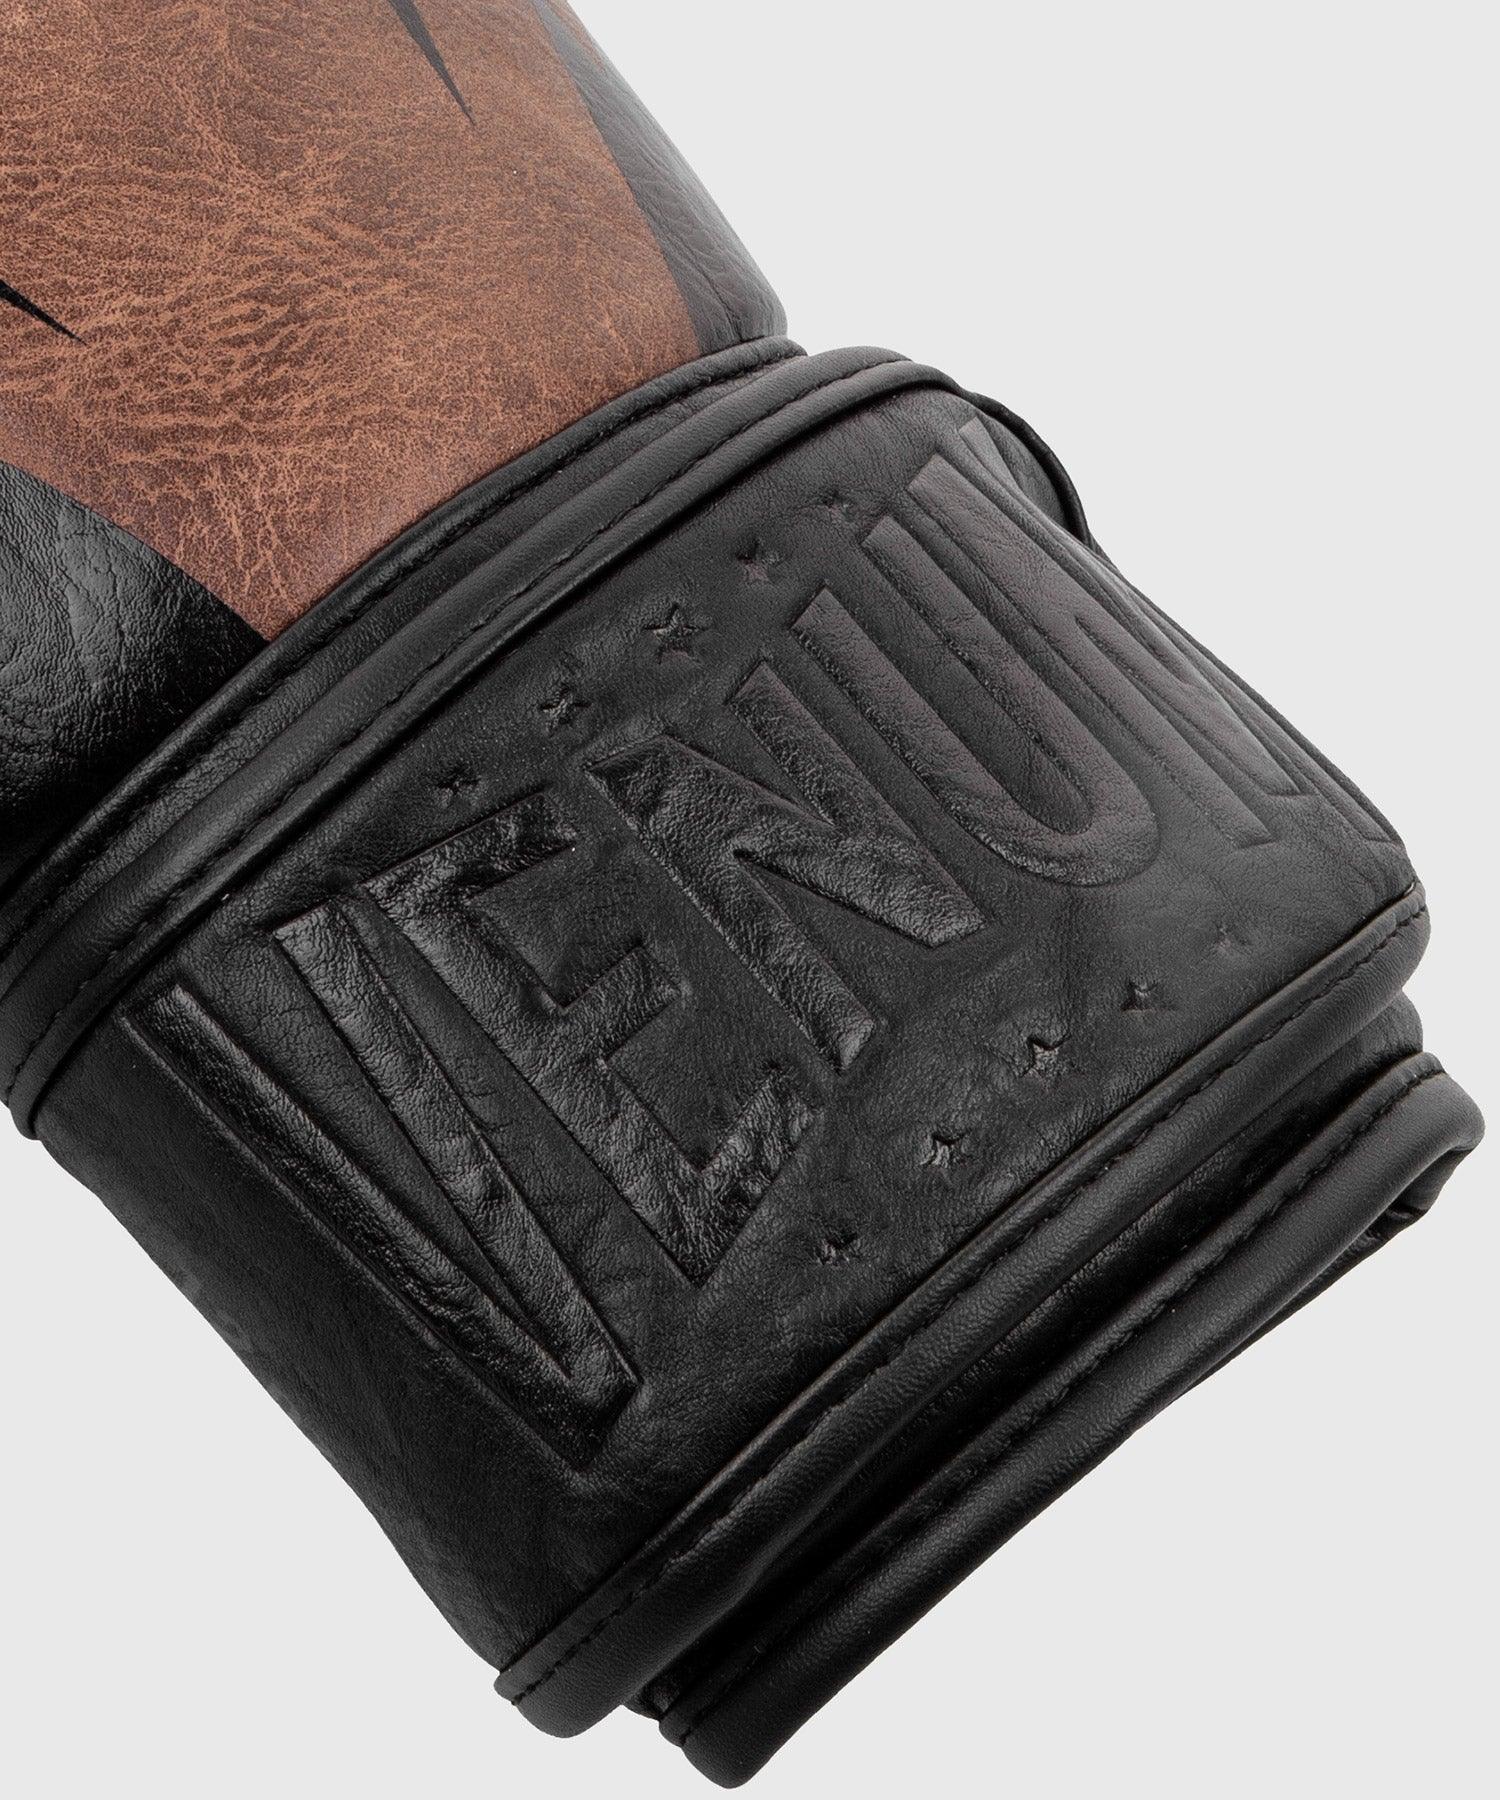 Venum Impact Boxing Gloves - Black/Brown